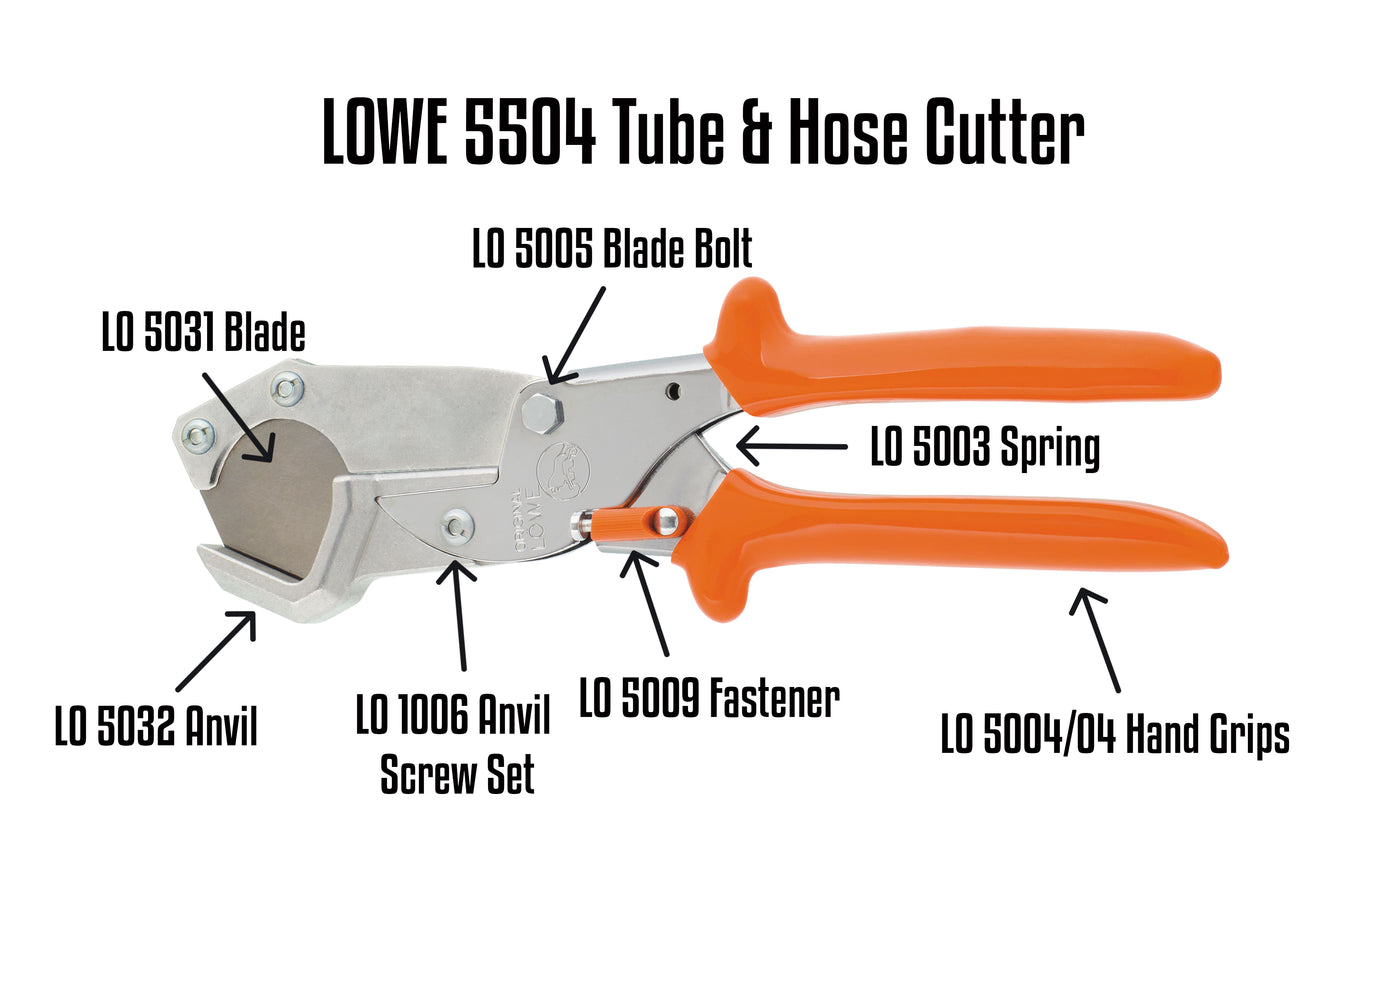 LO 5504 Hose Cutter Parts Guide